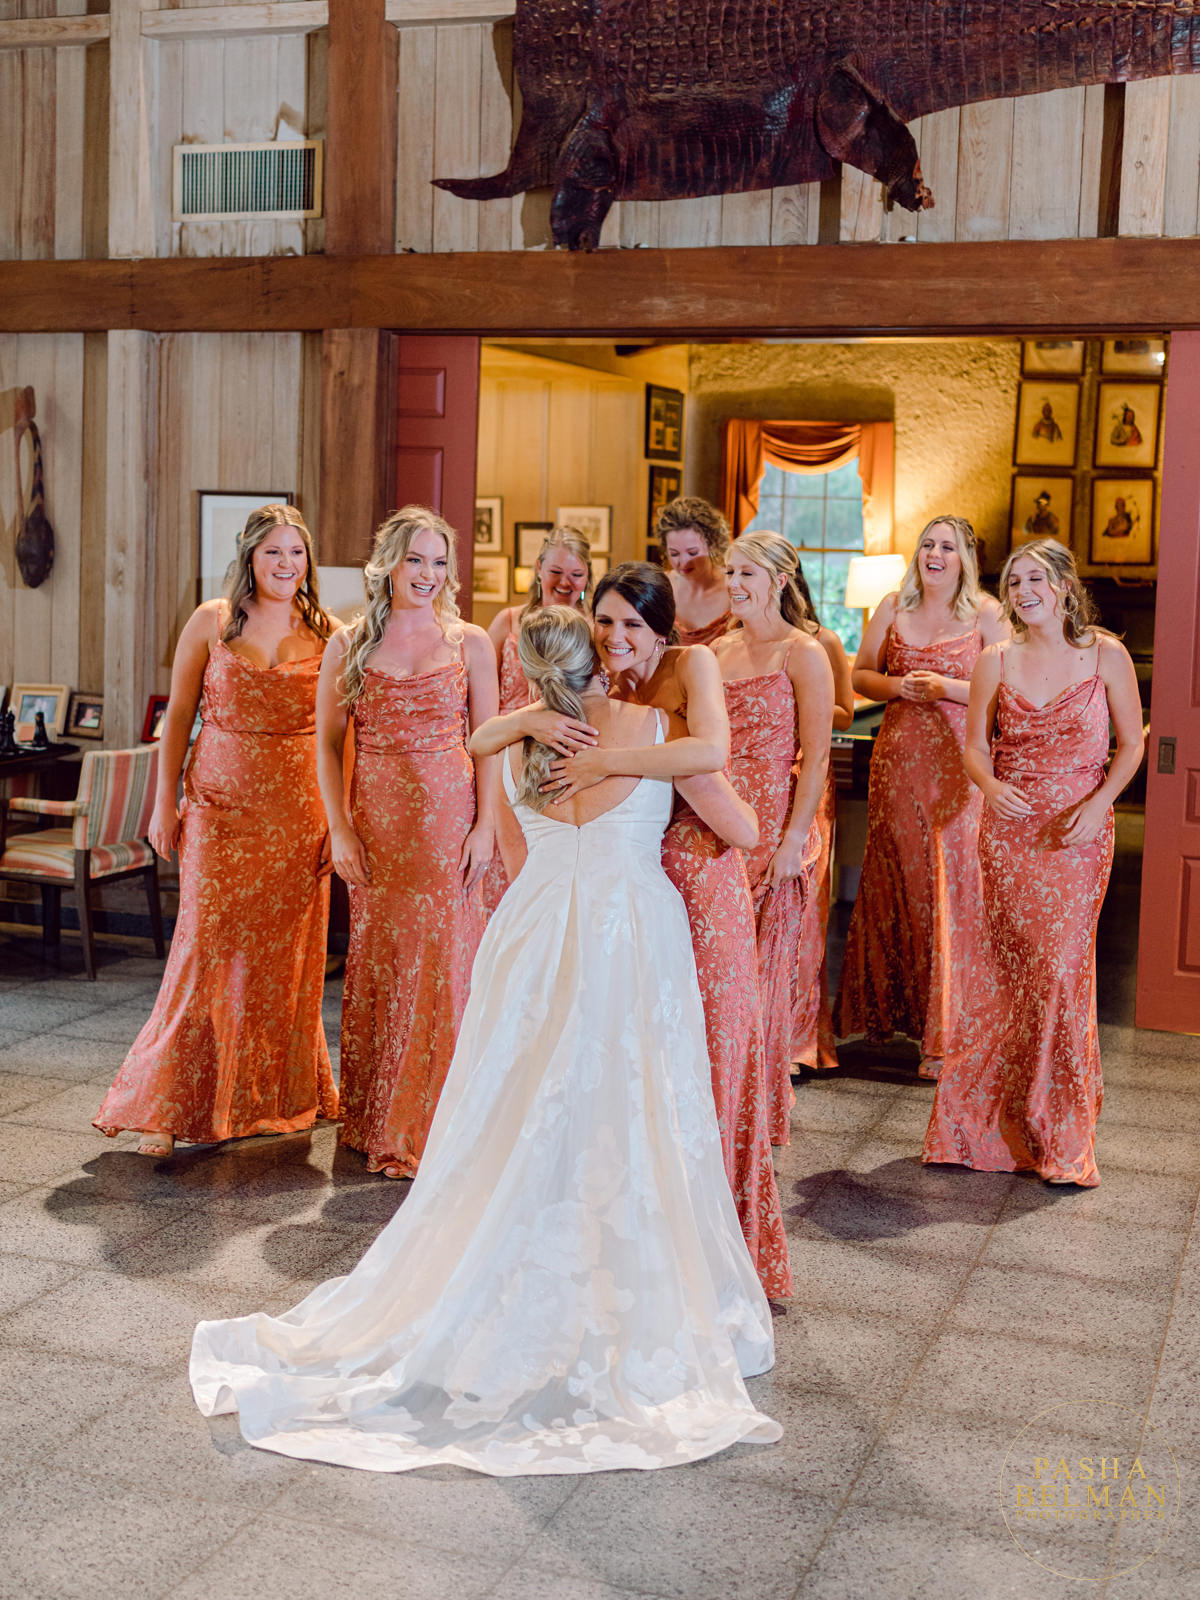 Musgrove Retreat Wedding Venue - Top Photographers in St Simons Island Wedding Photography